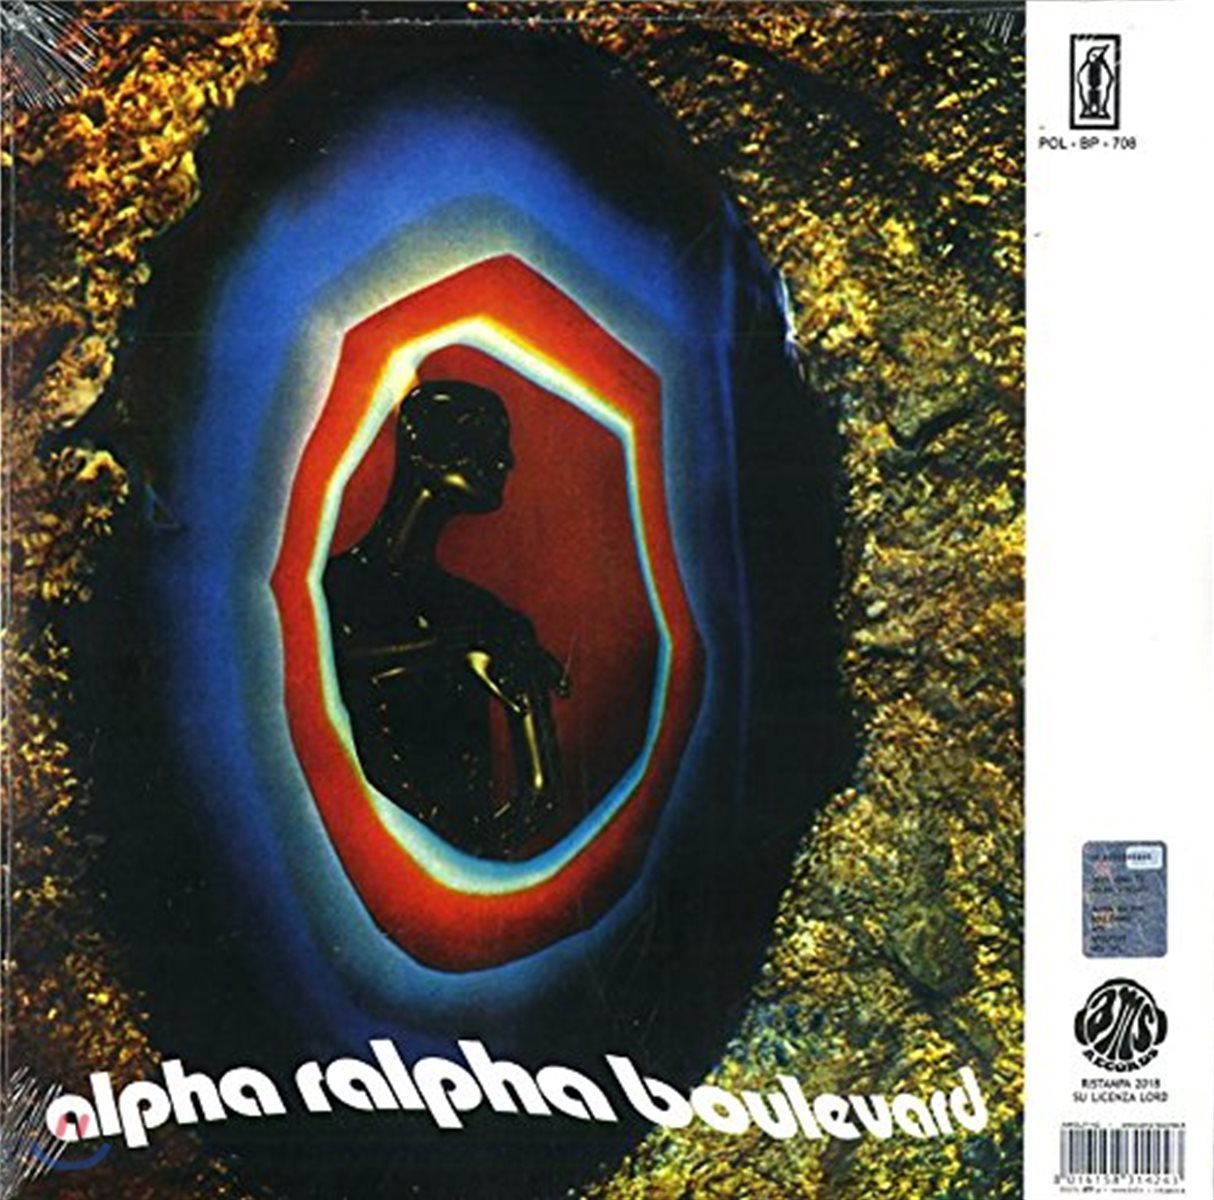 I Numi - Alpha Ralpha Boulevard [LP]